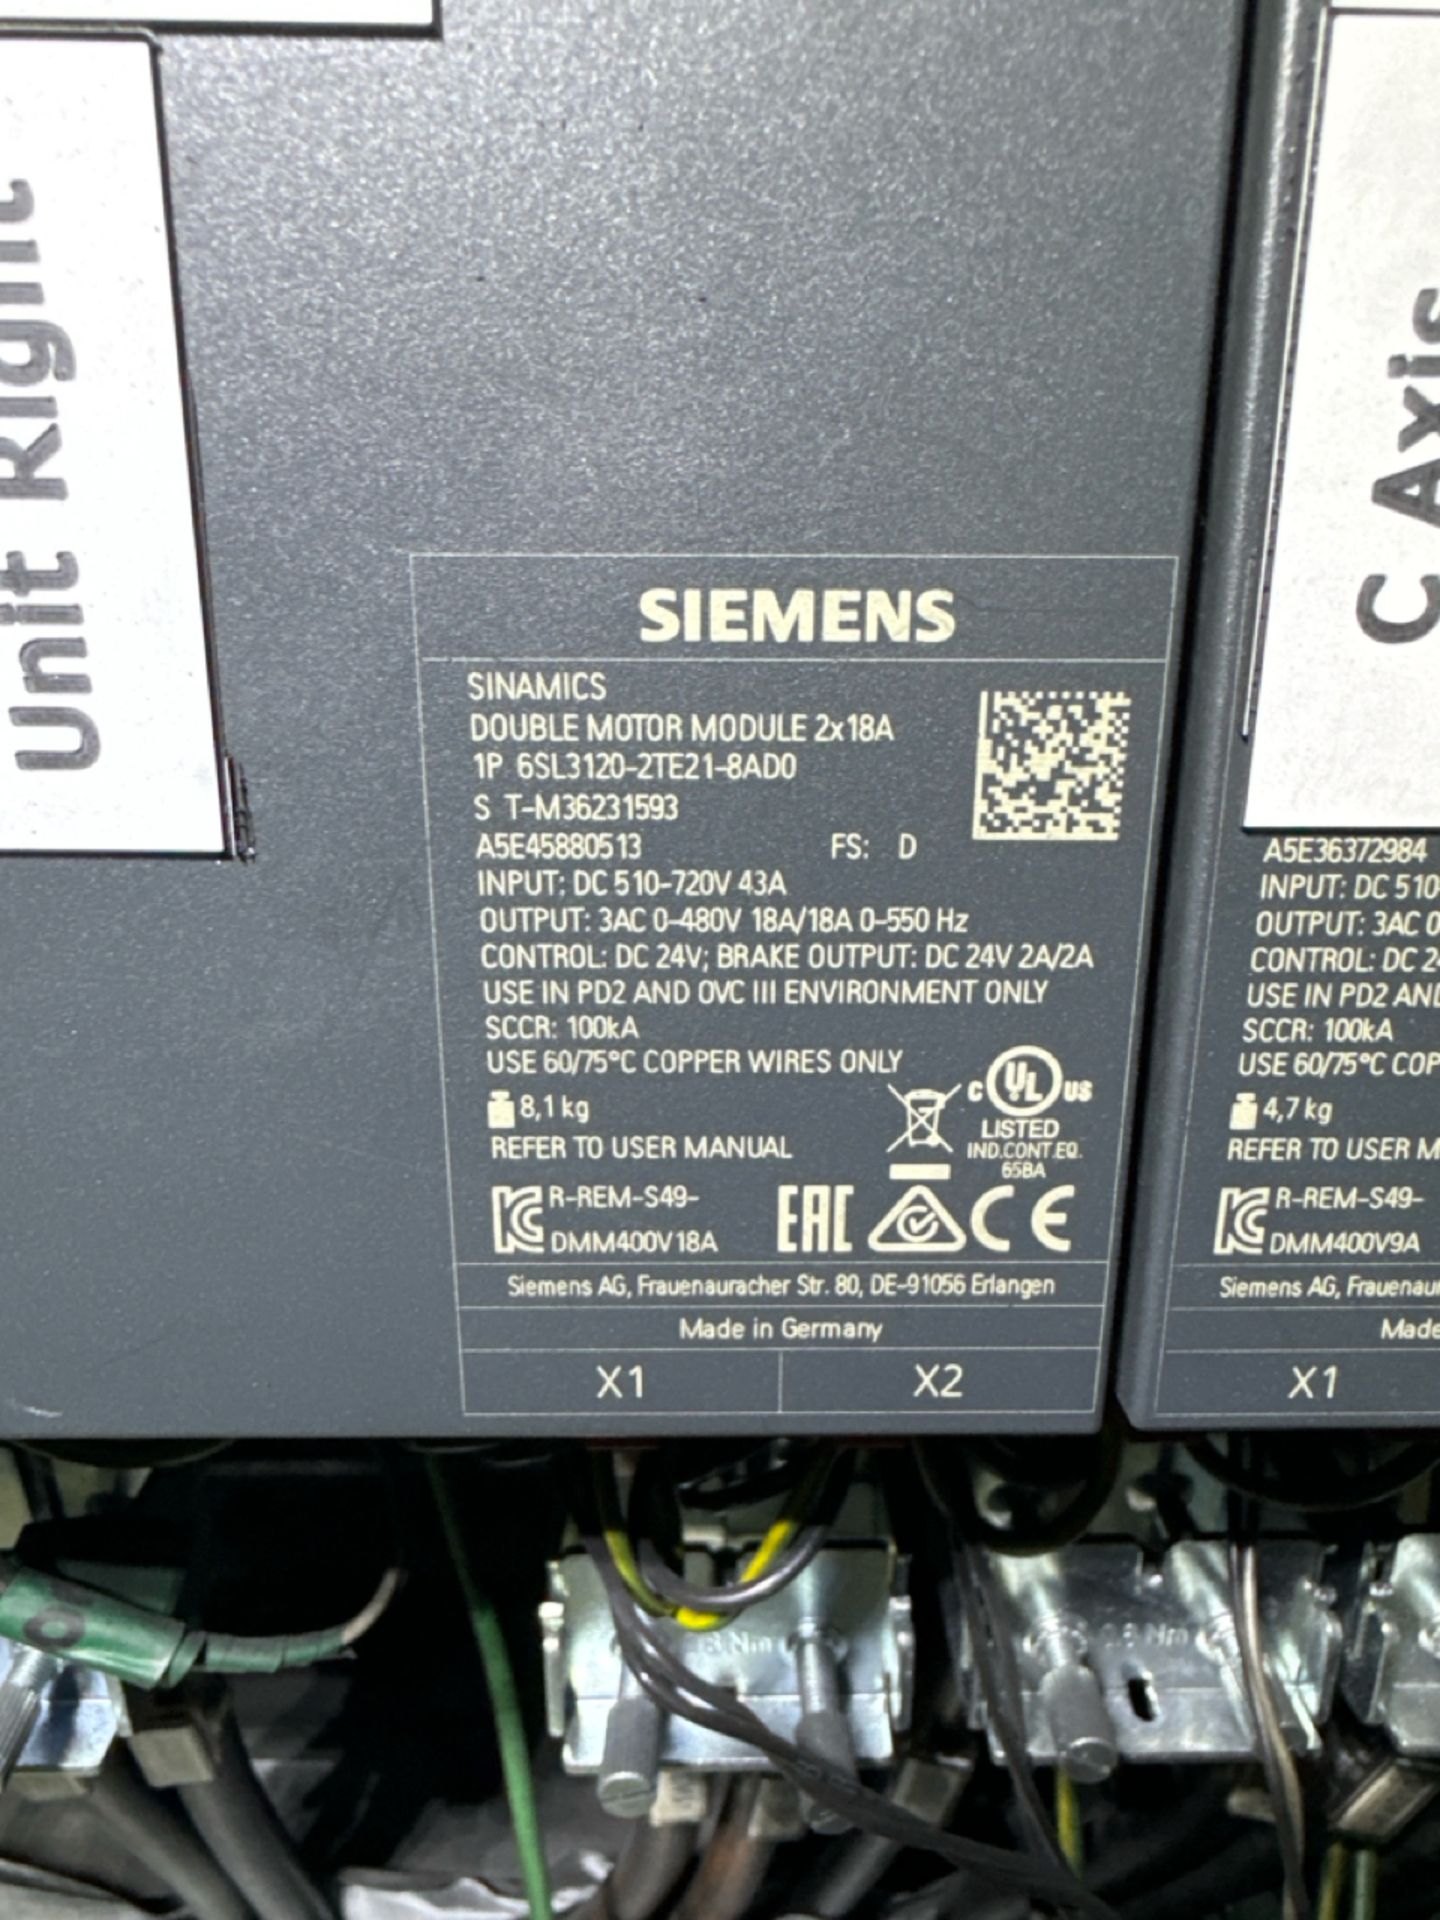 Siemens Sinamics Double Motor Module 2x18A - Image 2 of 2